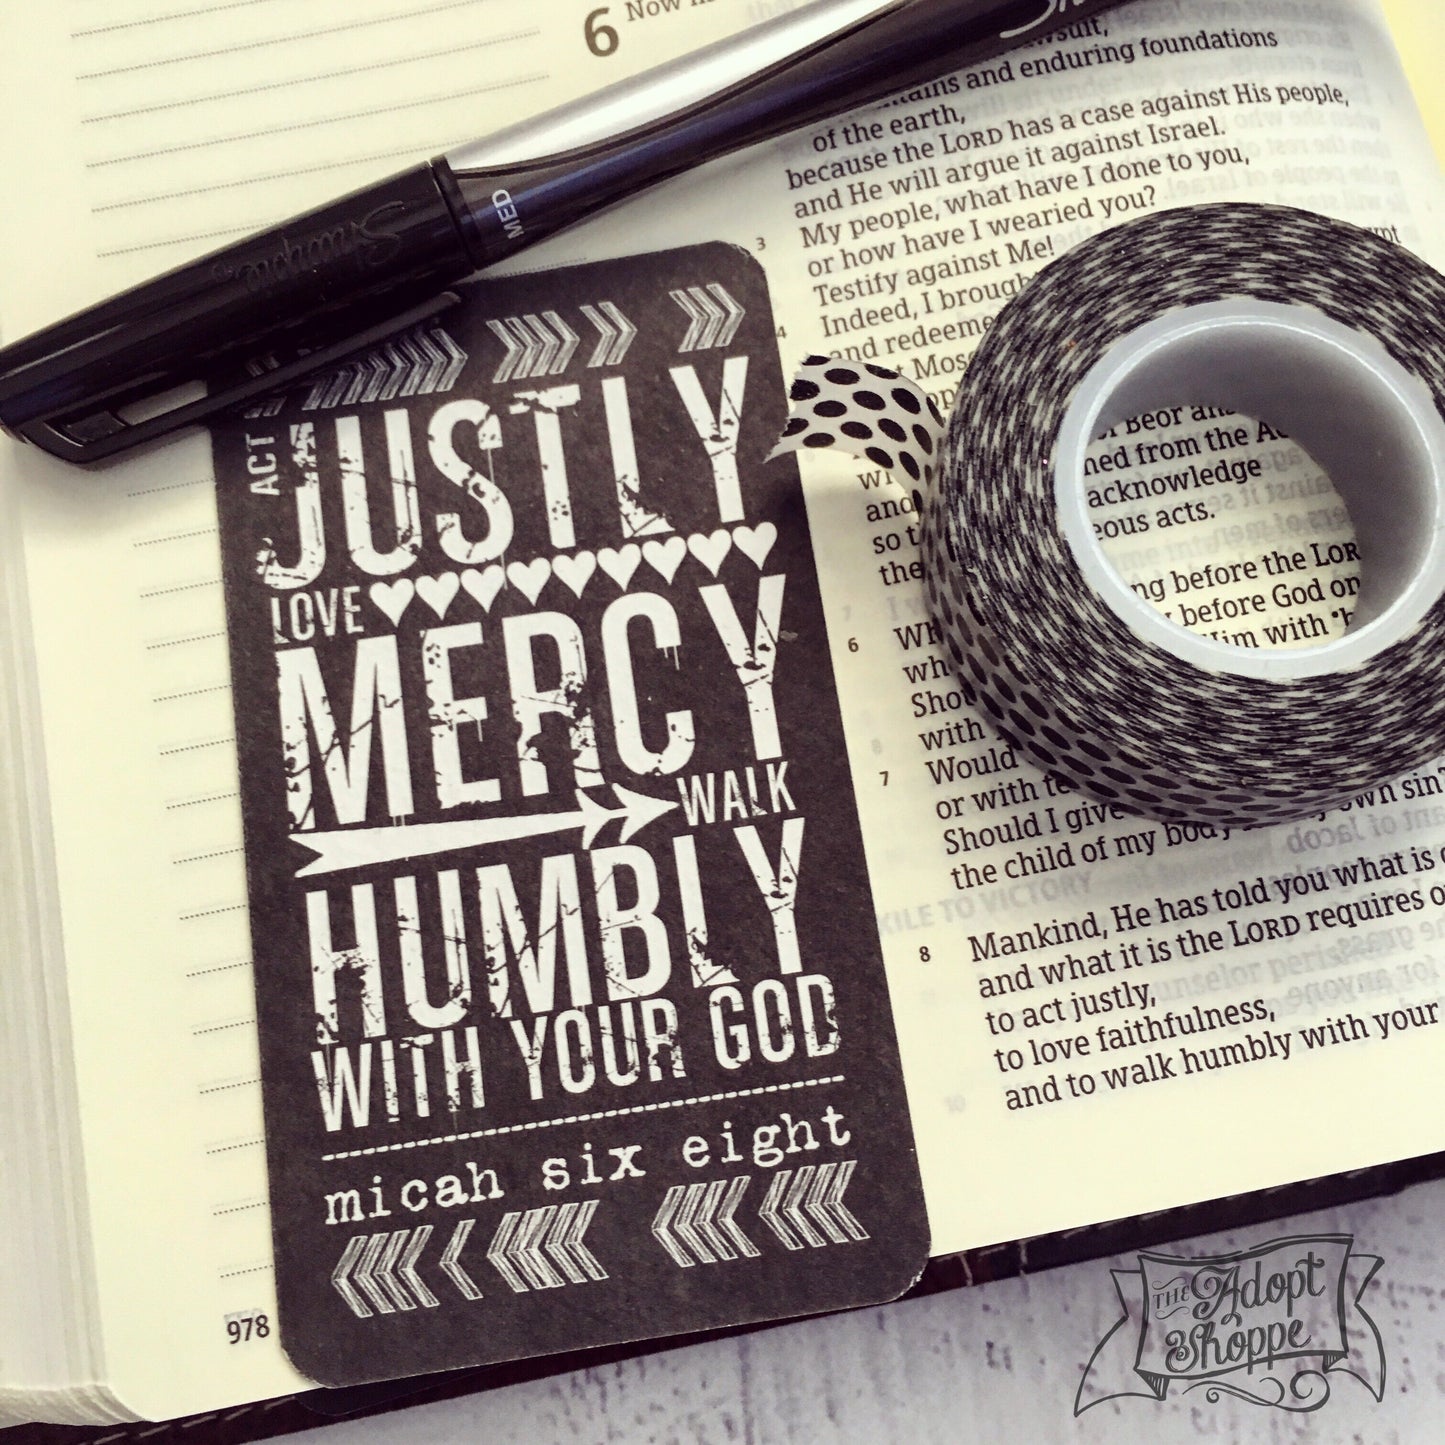 act justly // love mercy // walk humbly Micah 6:8 #TheAdoptShoppecard